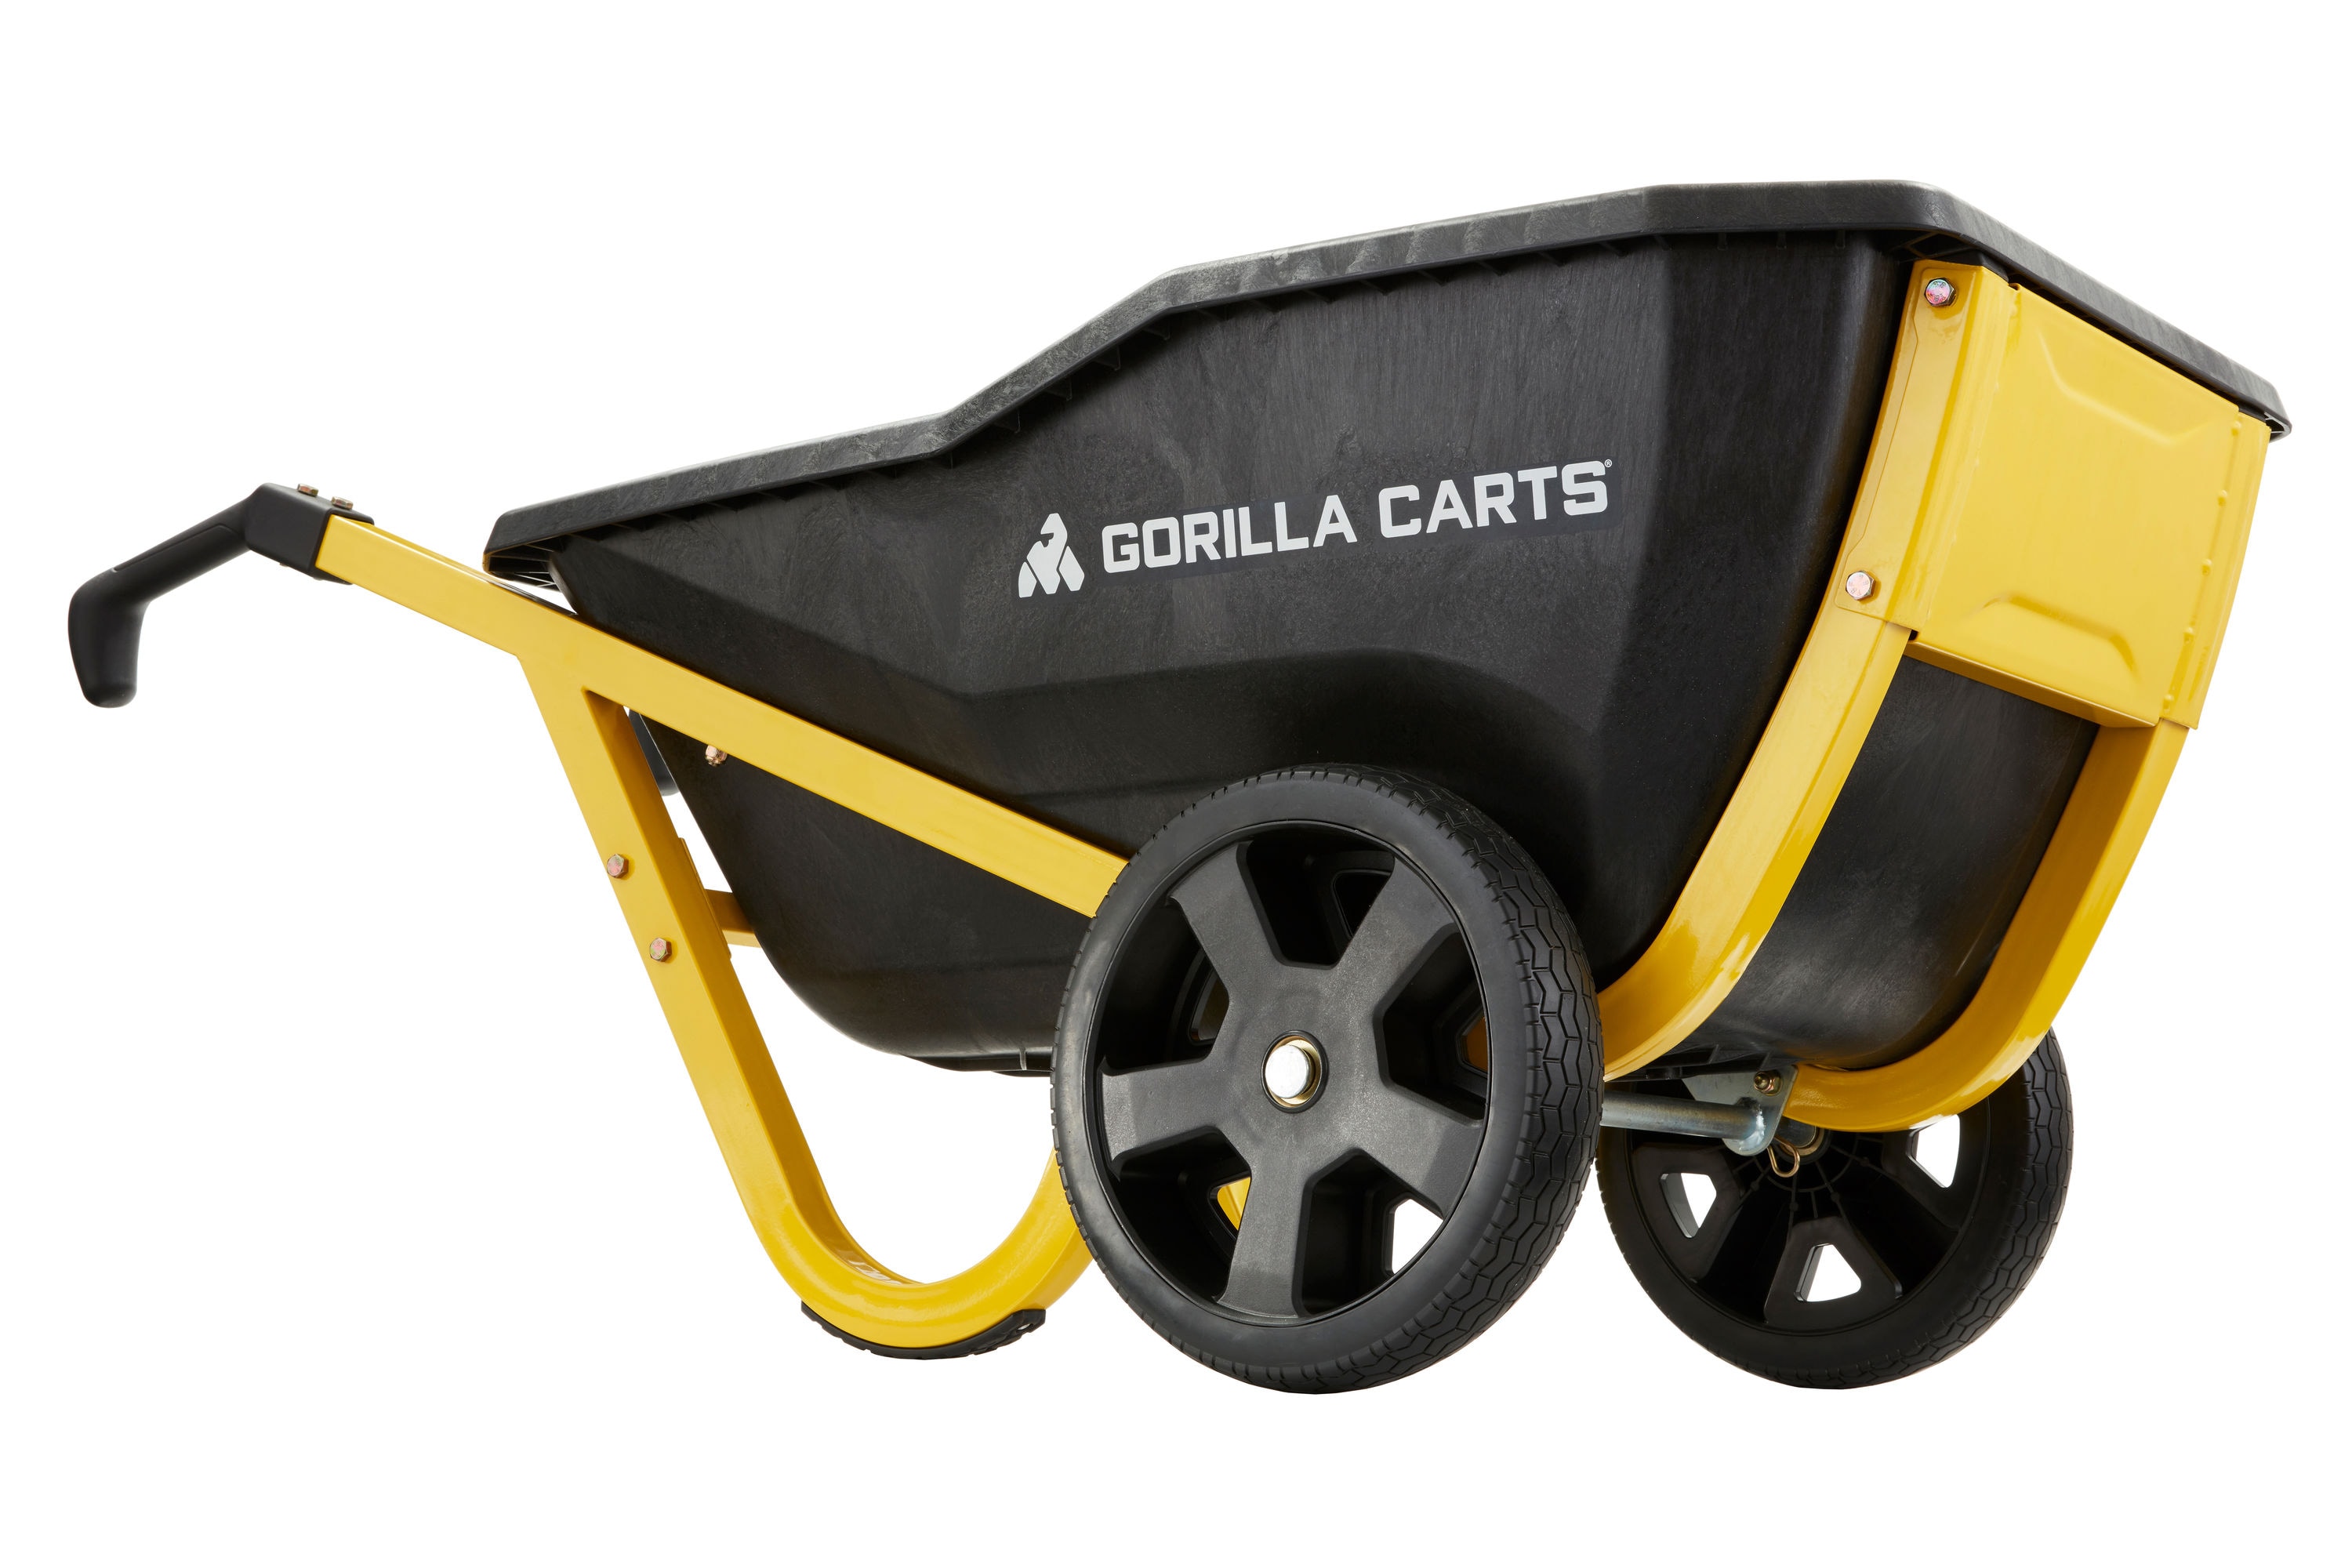 Gorilla Carts 7 Cu. Ft. 600 Lb. Evolution Garden Cart - Town